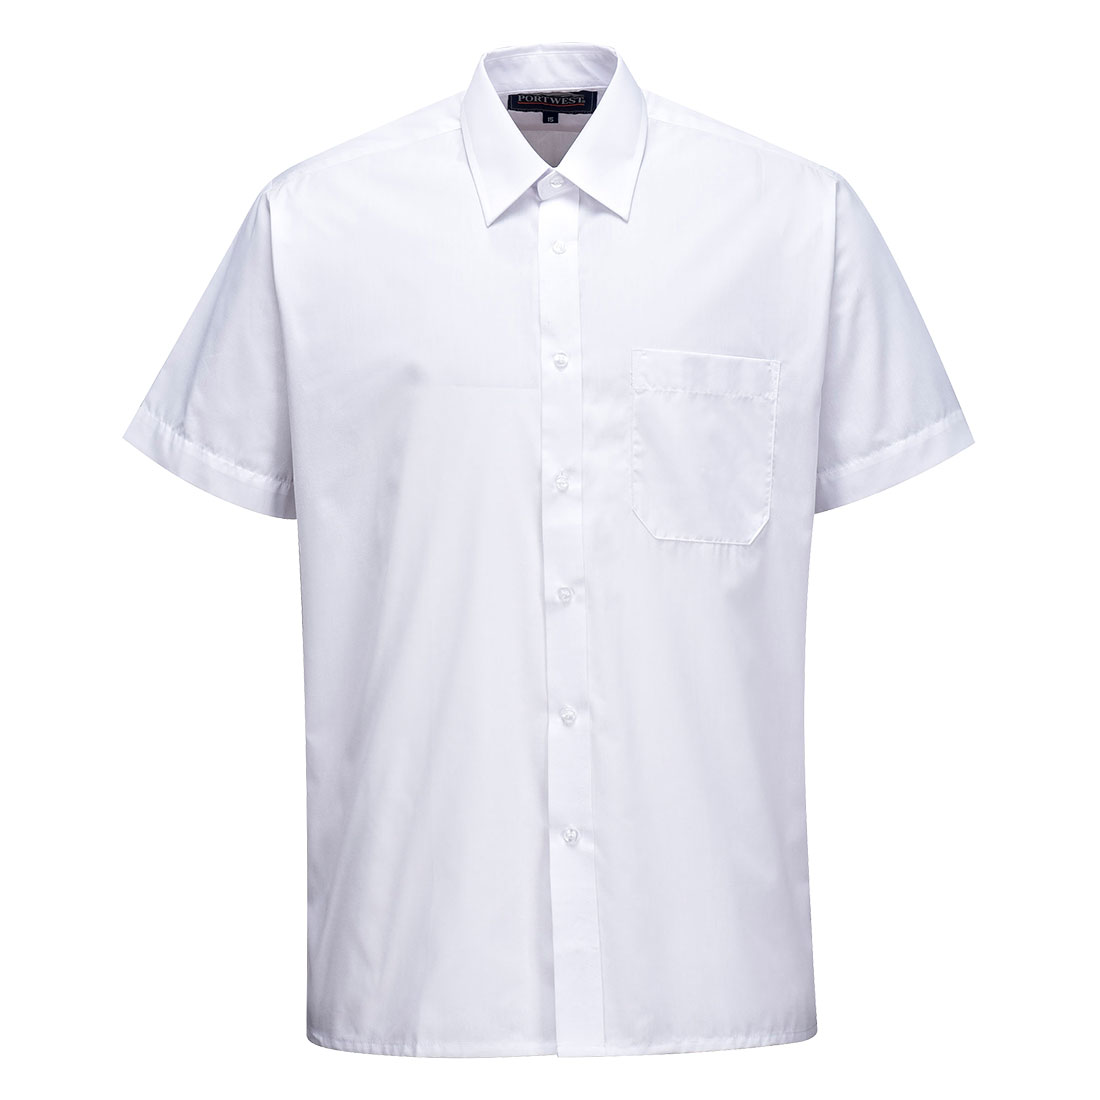 Portwest Classic Shirt Short Sleeves